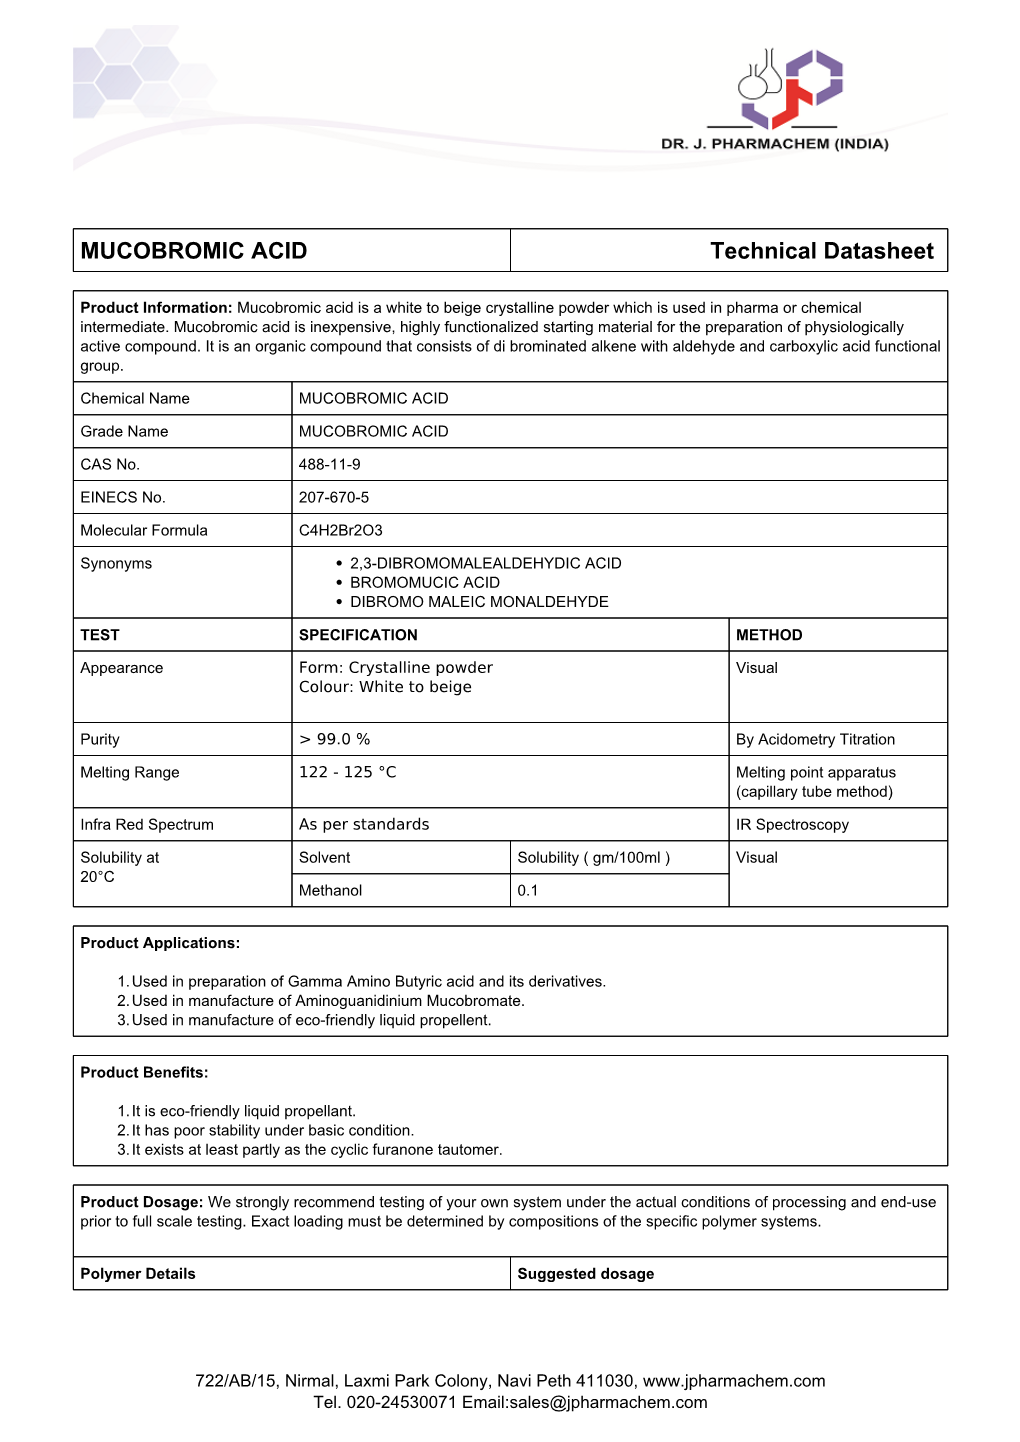 MUCOBROMIC ACID Technical Datasheet